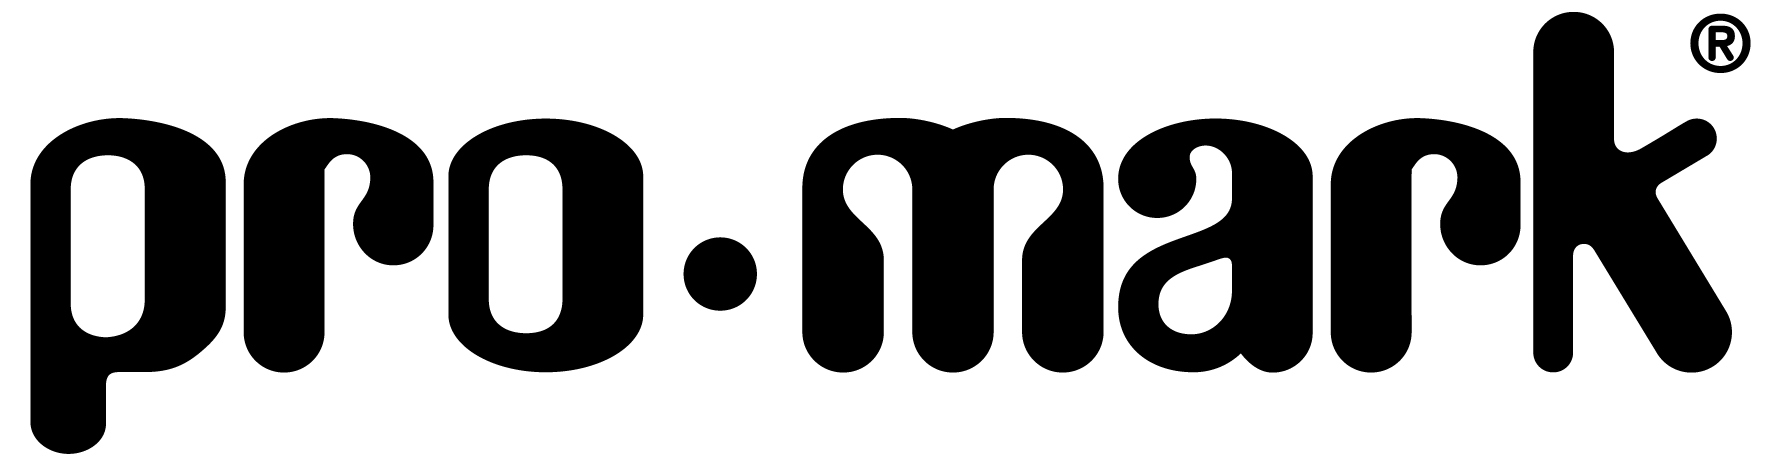 Pro Mark Logo photo - 1